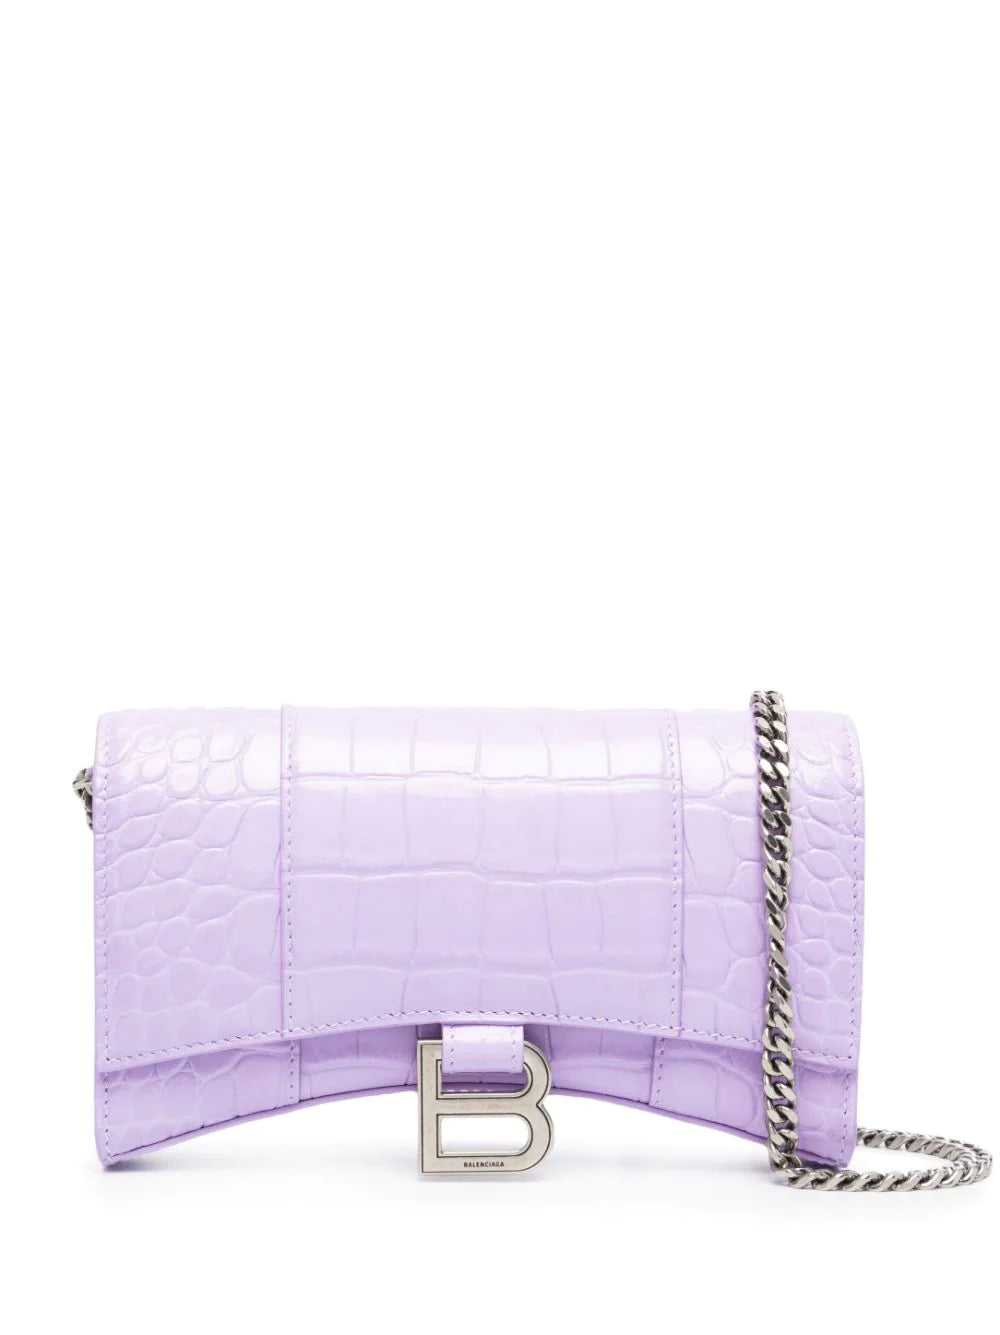 Balenciaga purple Hourglass Chain Wallet  Harrods UK